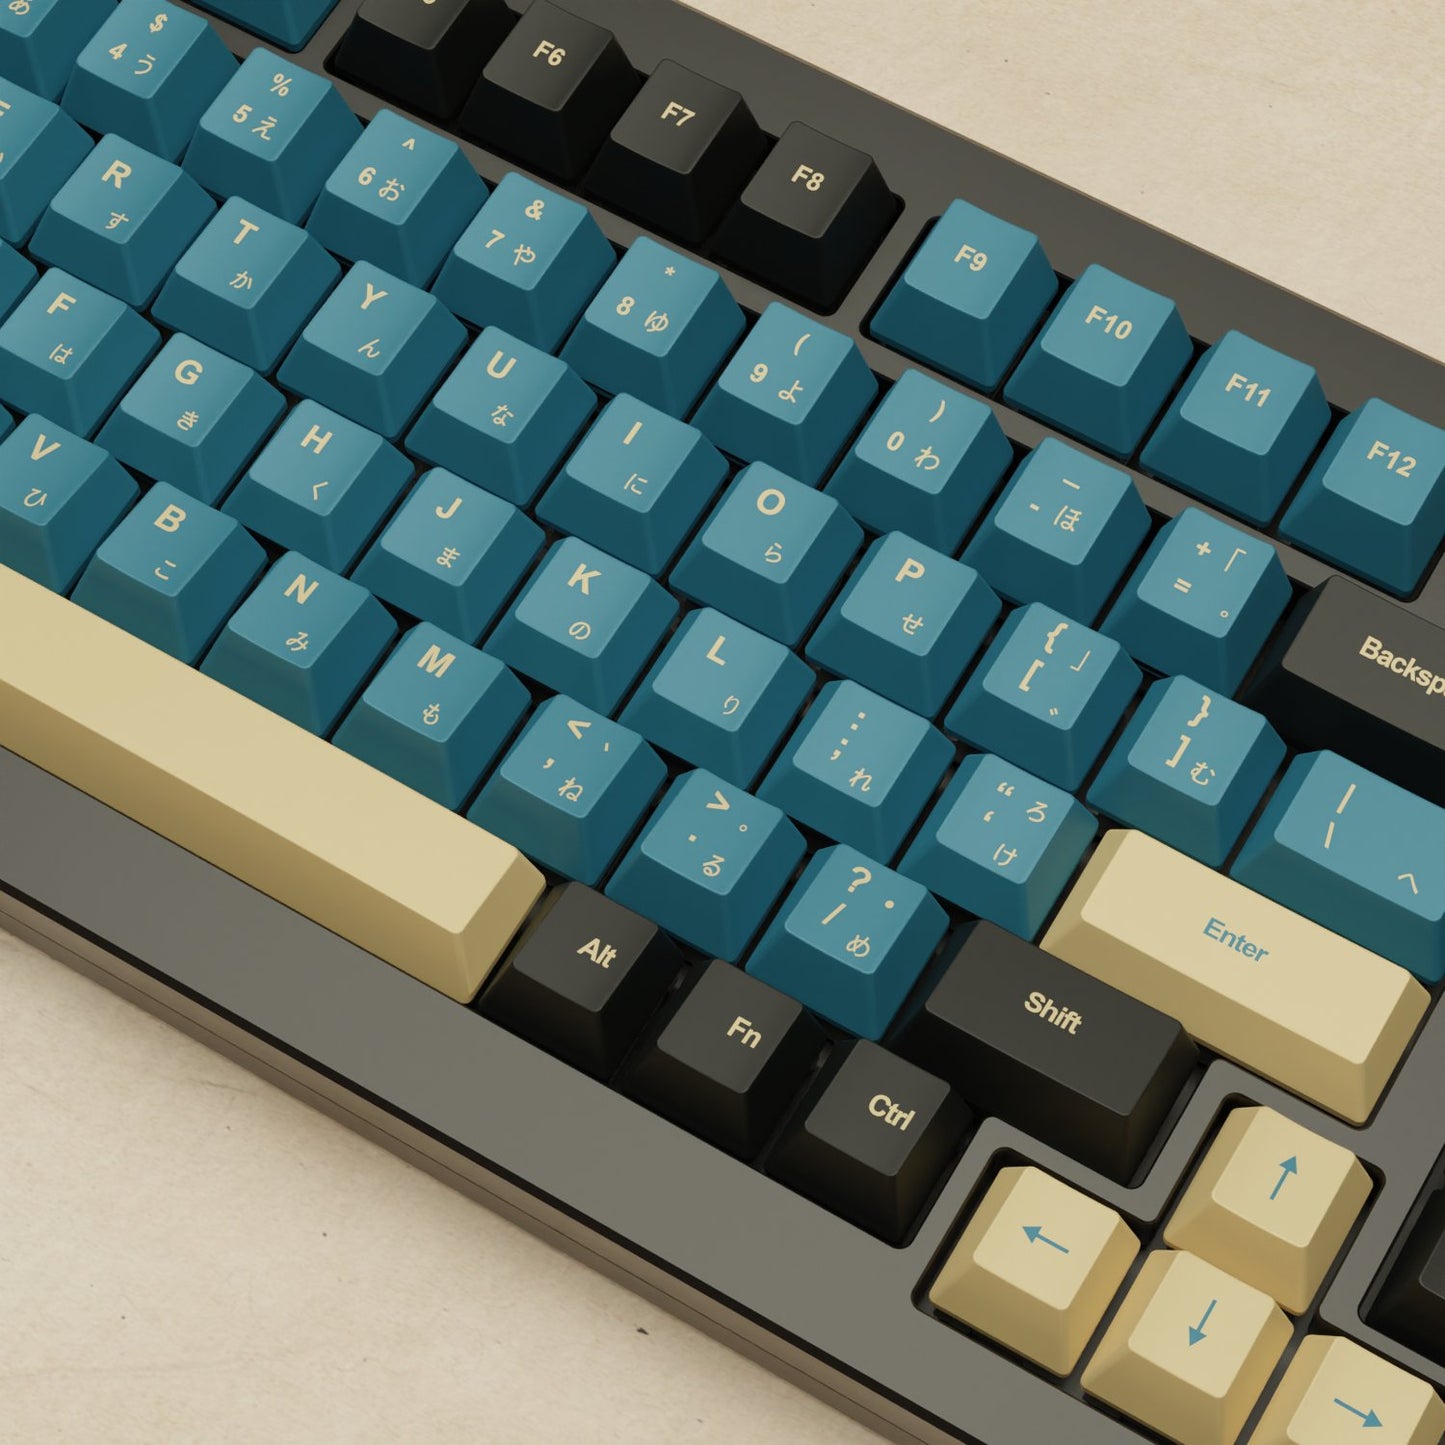 Monsgeek M1W - 75% Blue Samurai Mechanical Keyboard - Goblintechkeys